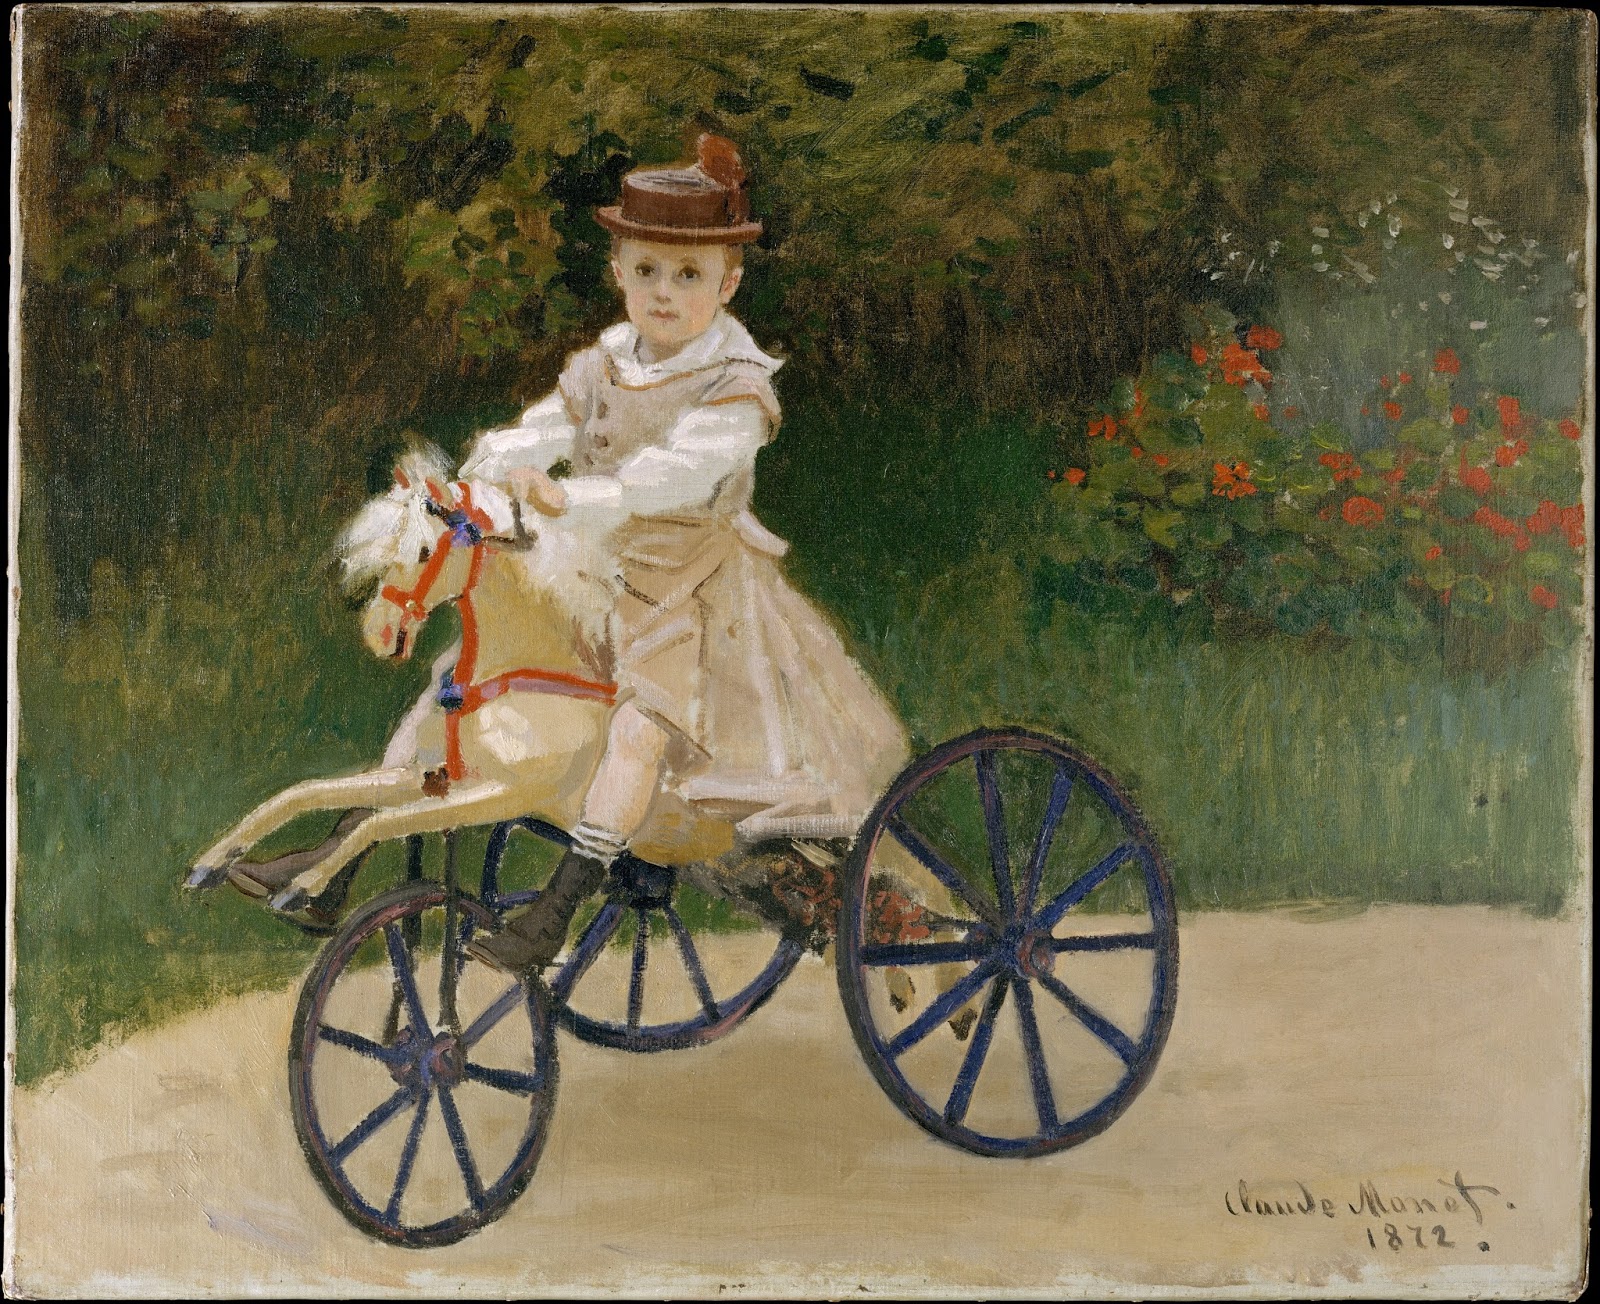 Claude+Monet-1840-1926 (340).jpg